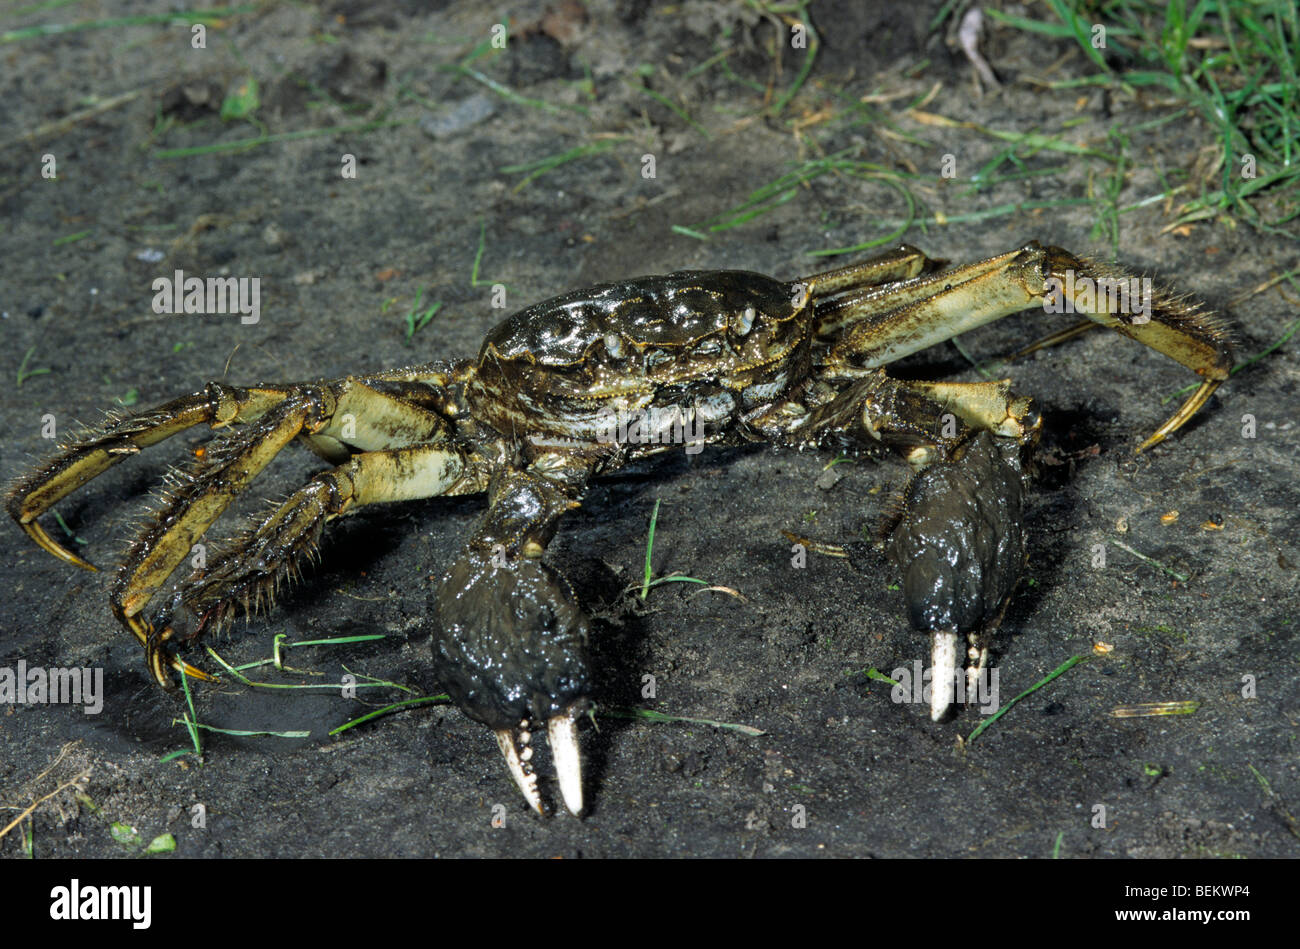 Crabe chinois / gros crabe écluse / Shanghai hairy crabe chinois (Eriocheir sinensis), originaire de l'Asie du Crabe fouisseur Banque D'Images